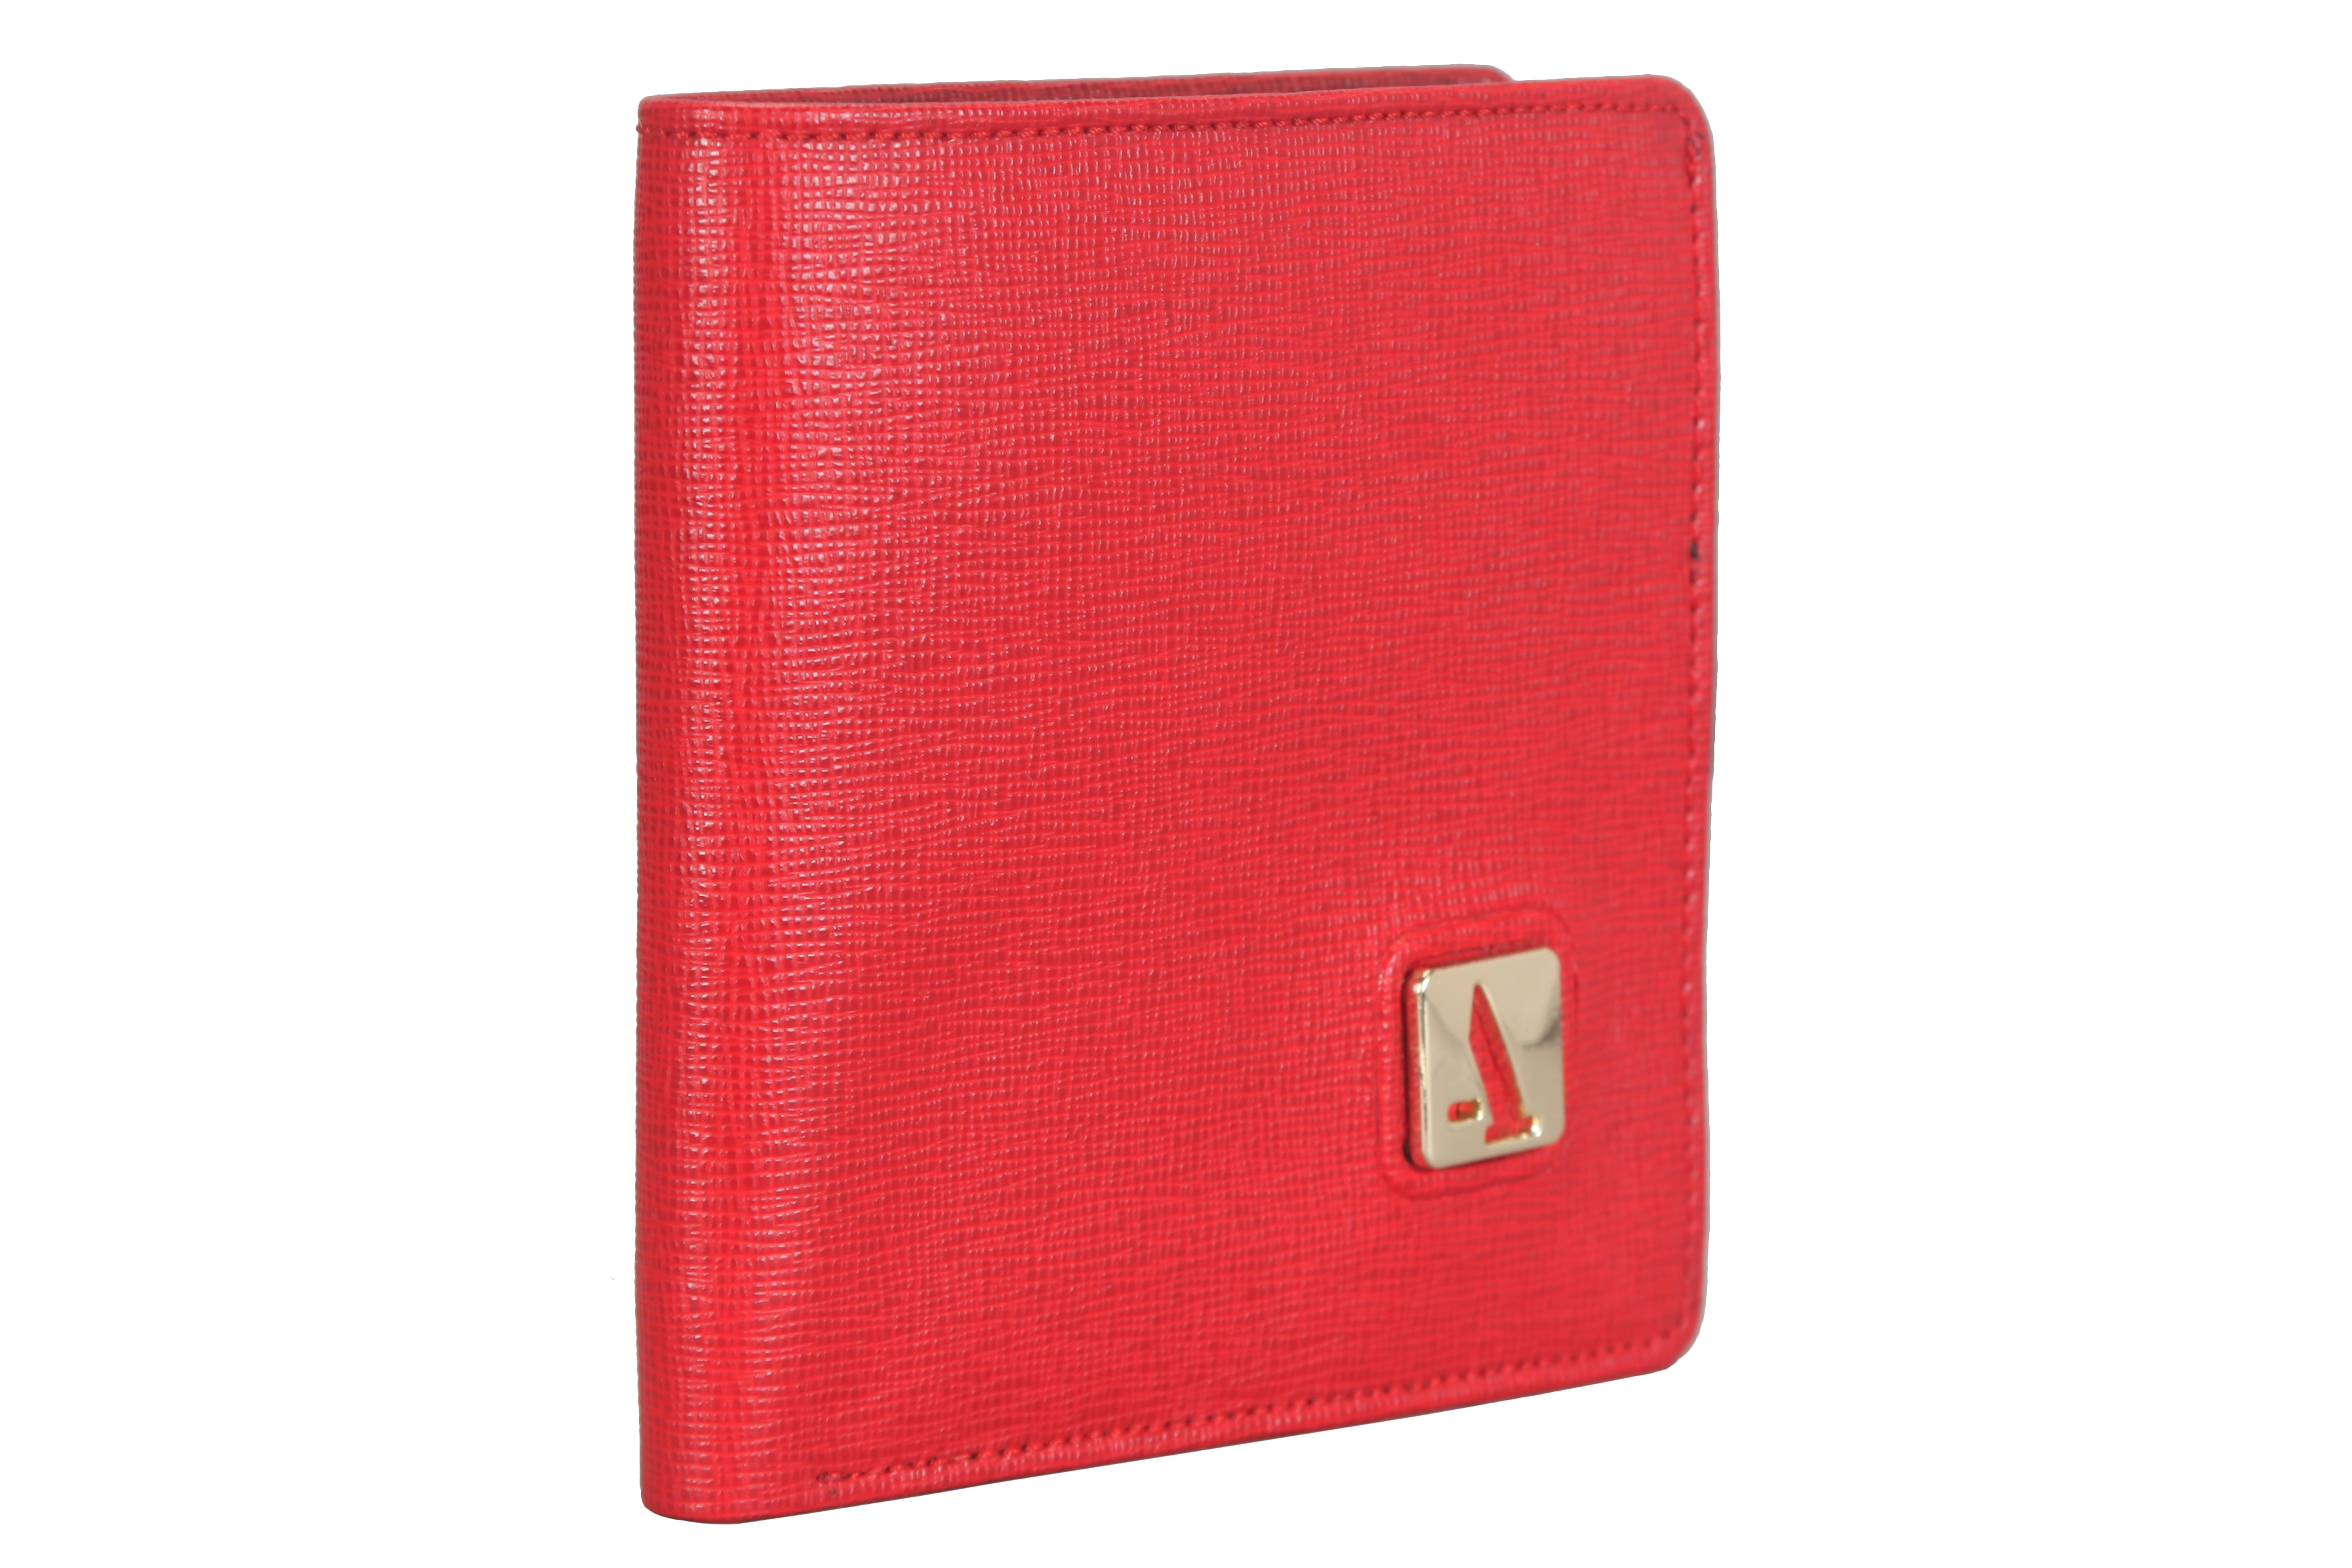 W318-Alabama-Women's bifold wallet in Genuine Leather - Red/Black